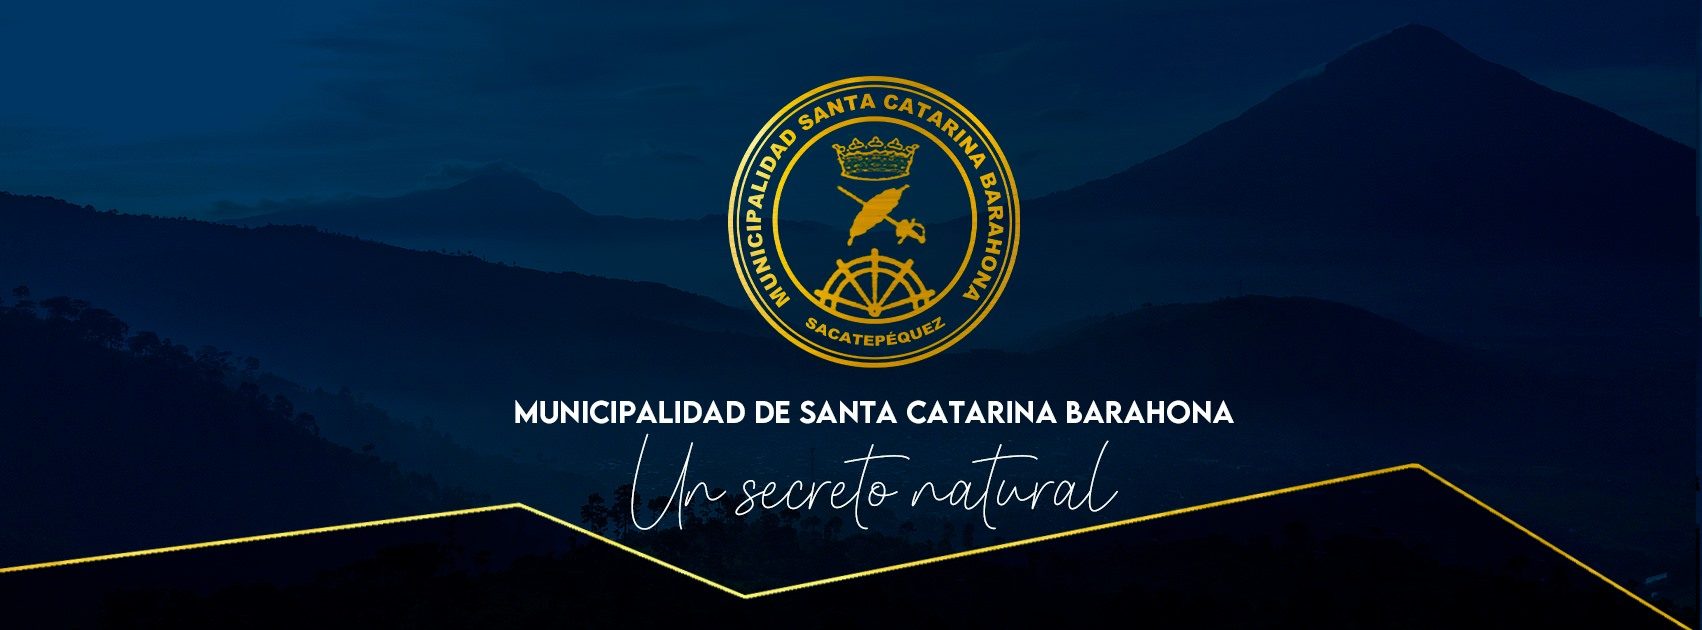 Municipalidad de Santa Catarina Barahona, Sacatepéquez